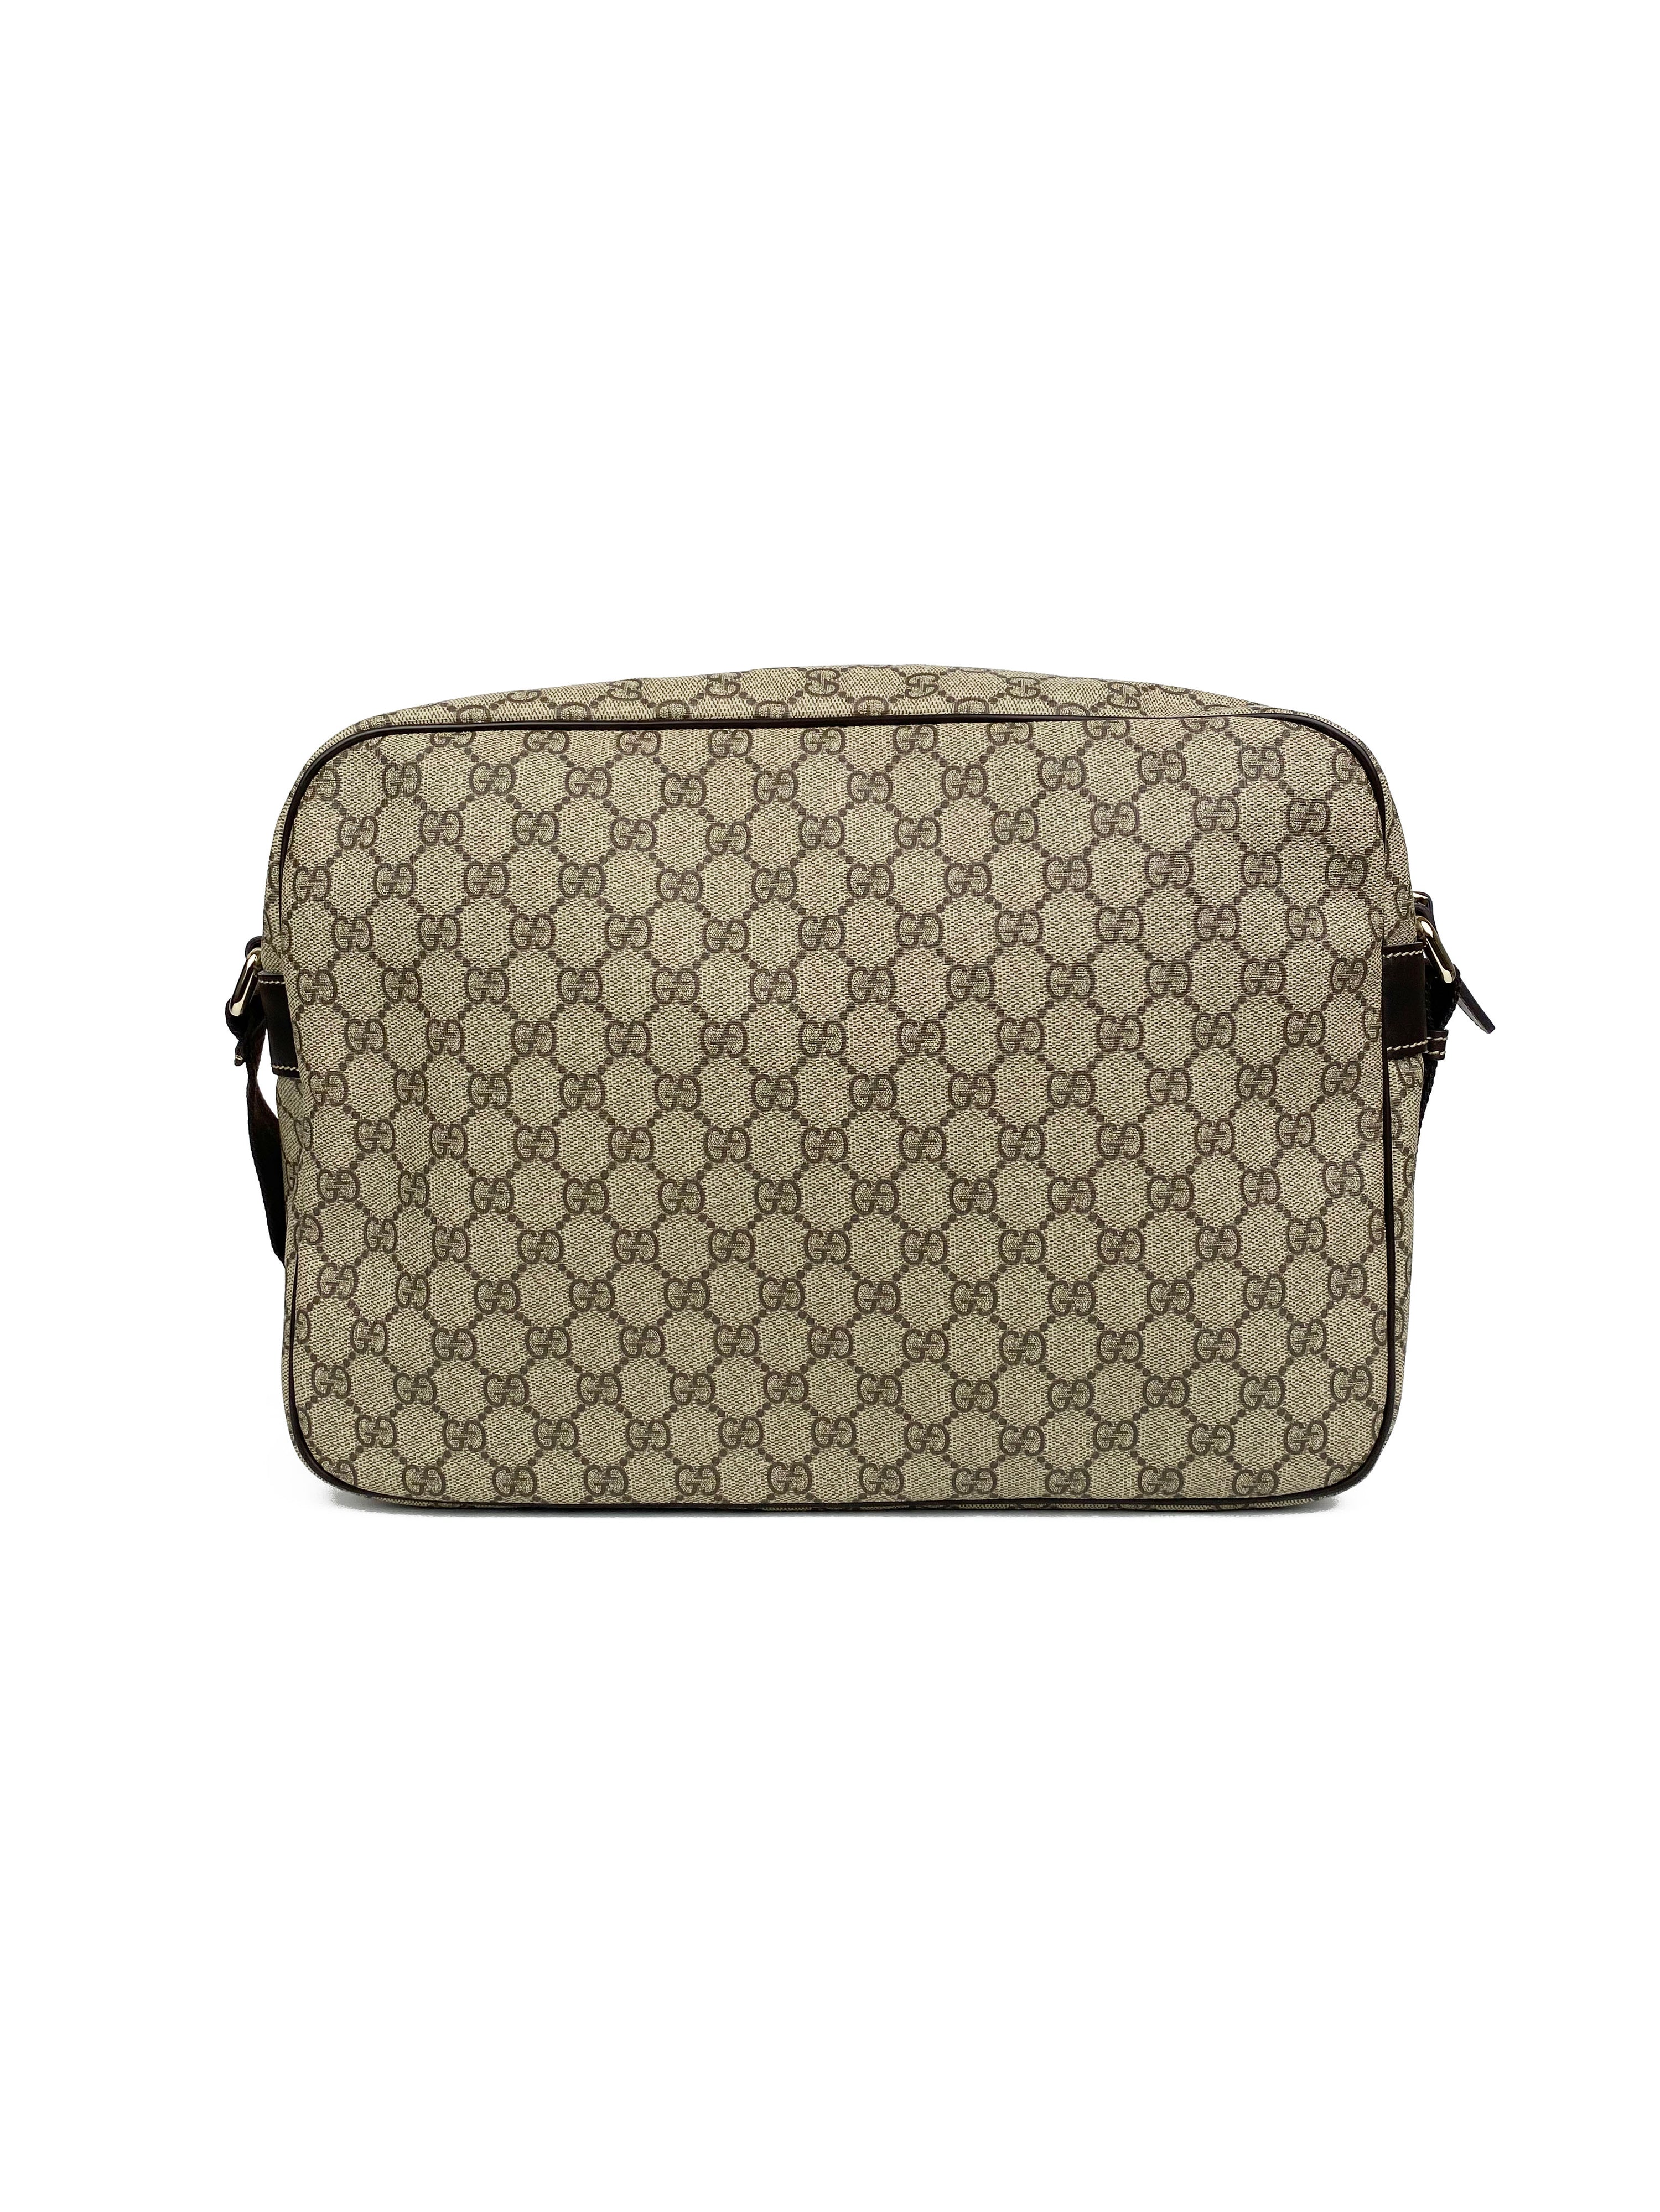 Gucci Monogram Laptop Bag